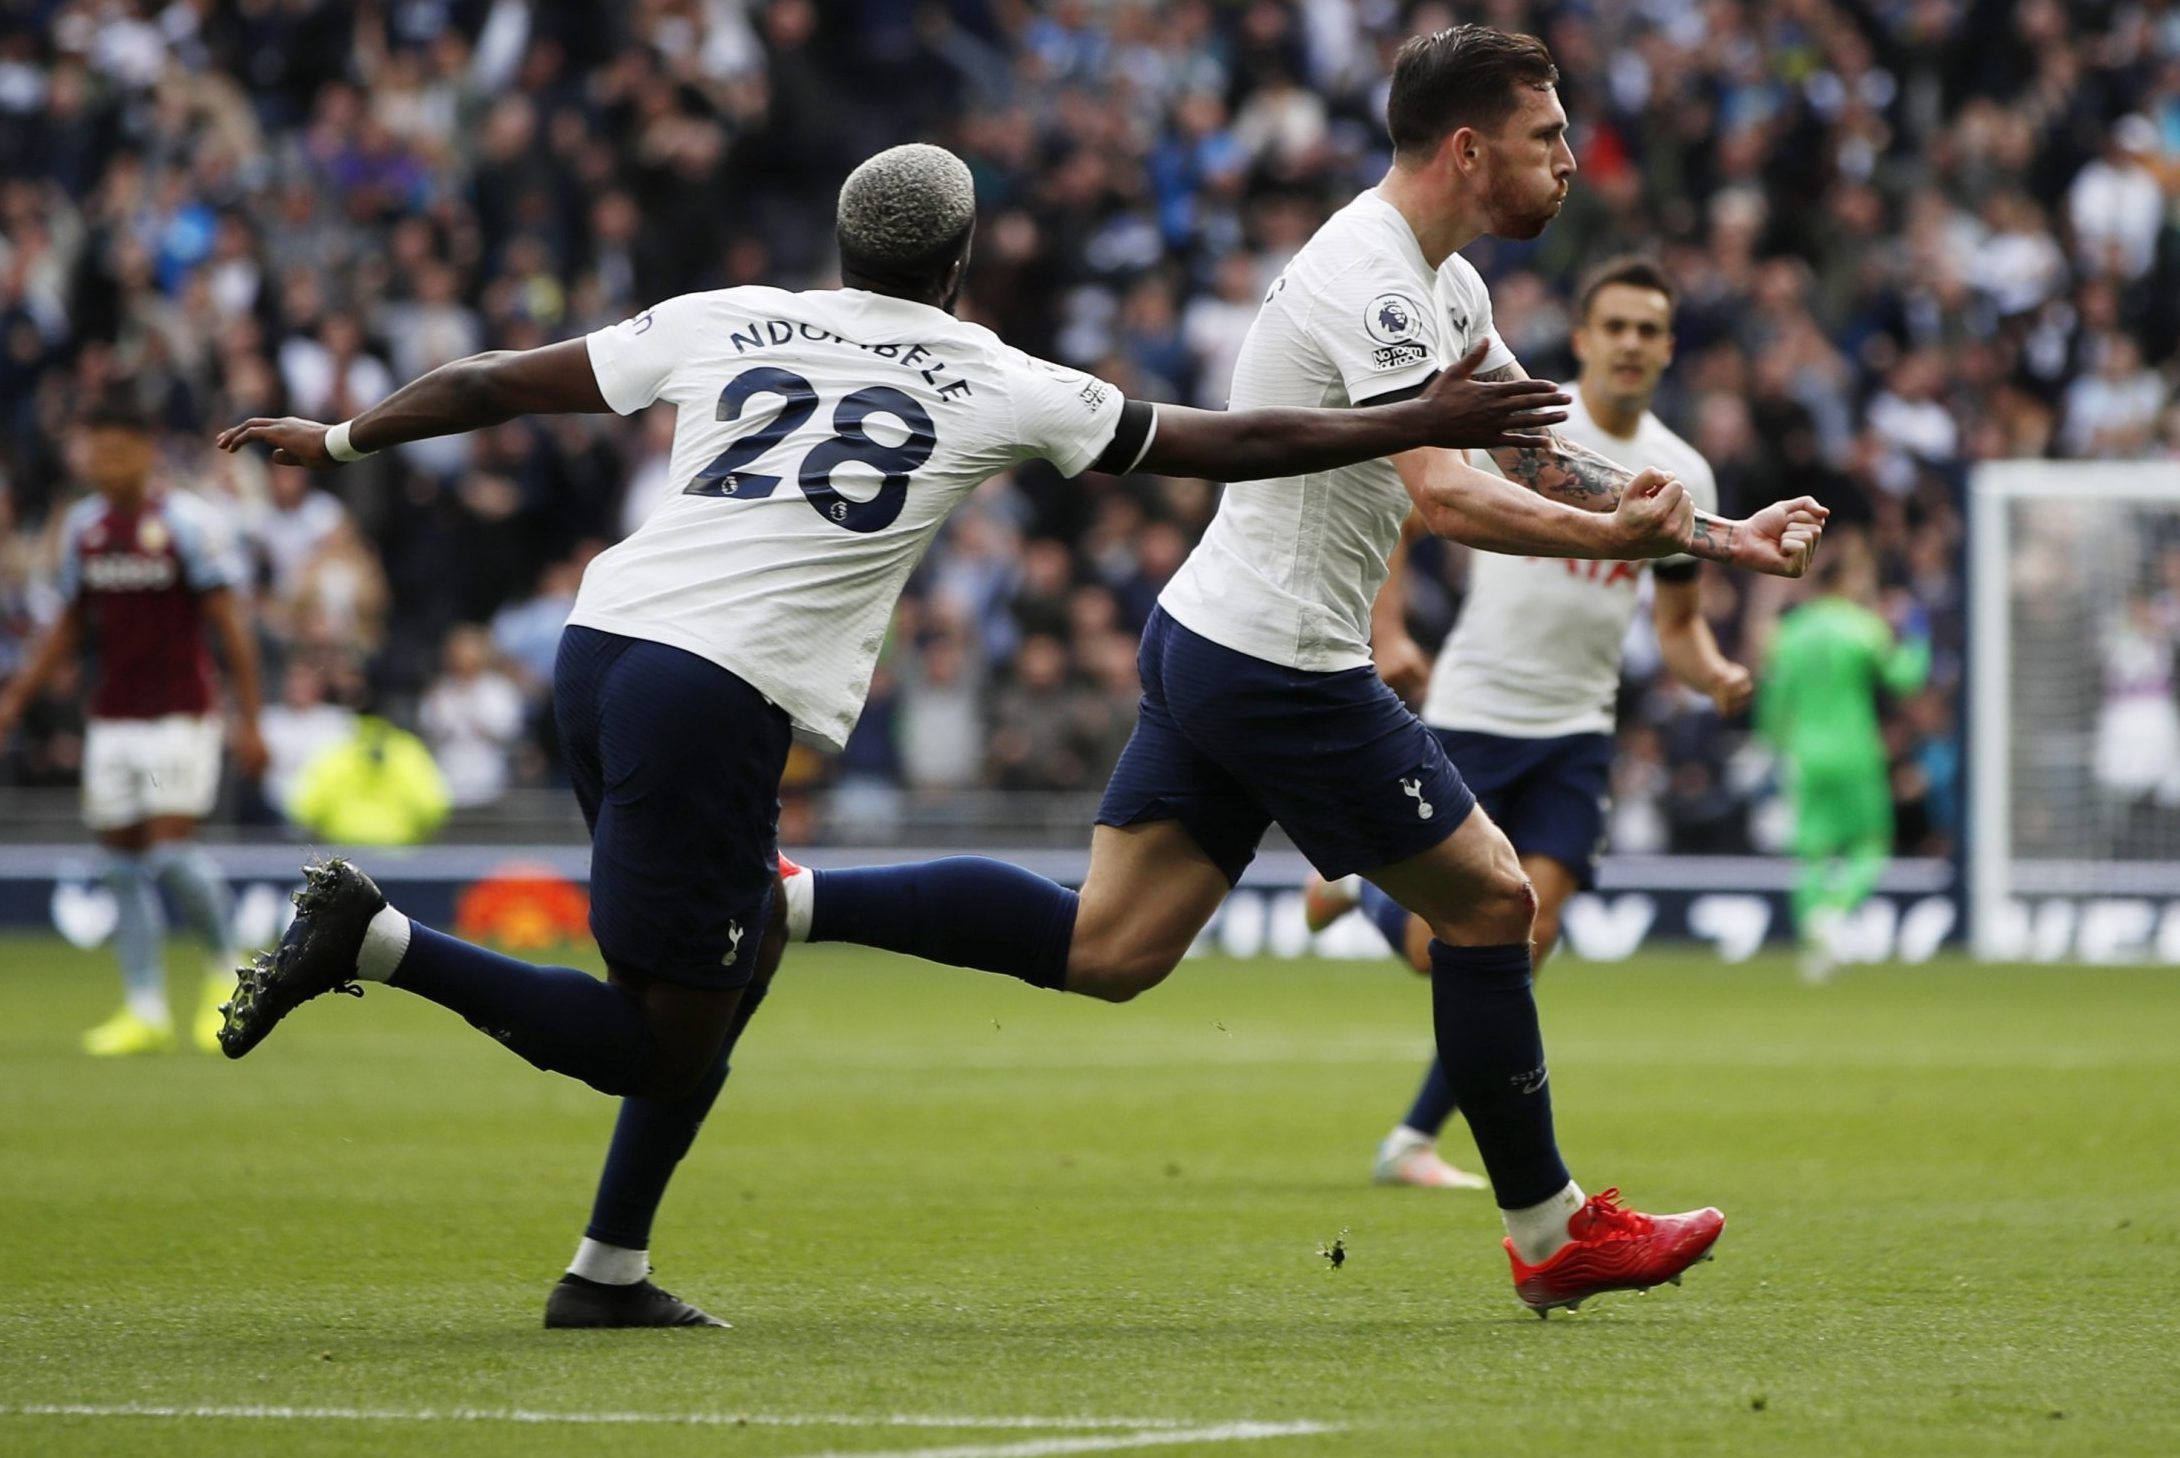 Spurs midfielder Pierre-Emile Hojbjerg celebrates scoring against Aston Villa in the Premier League